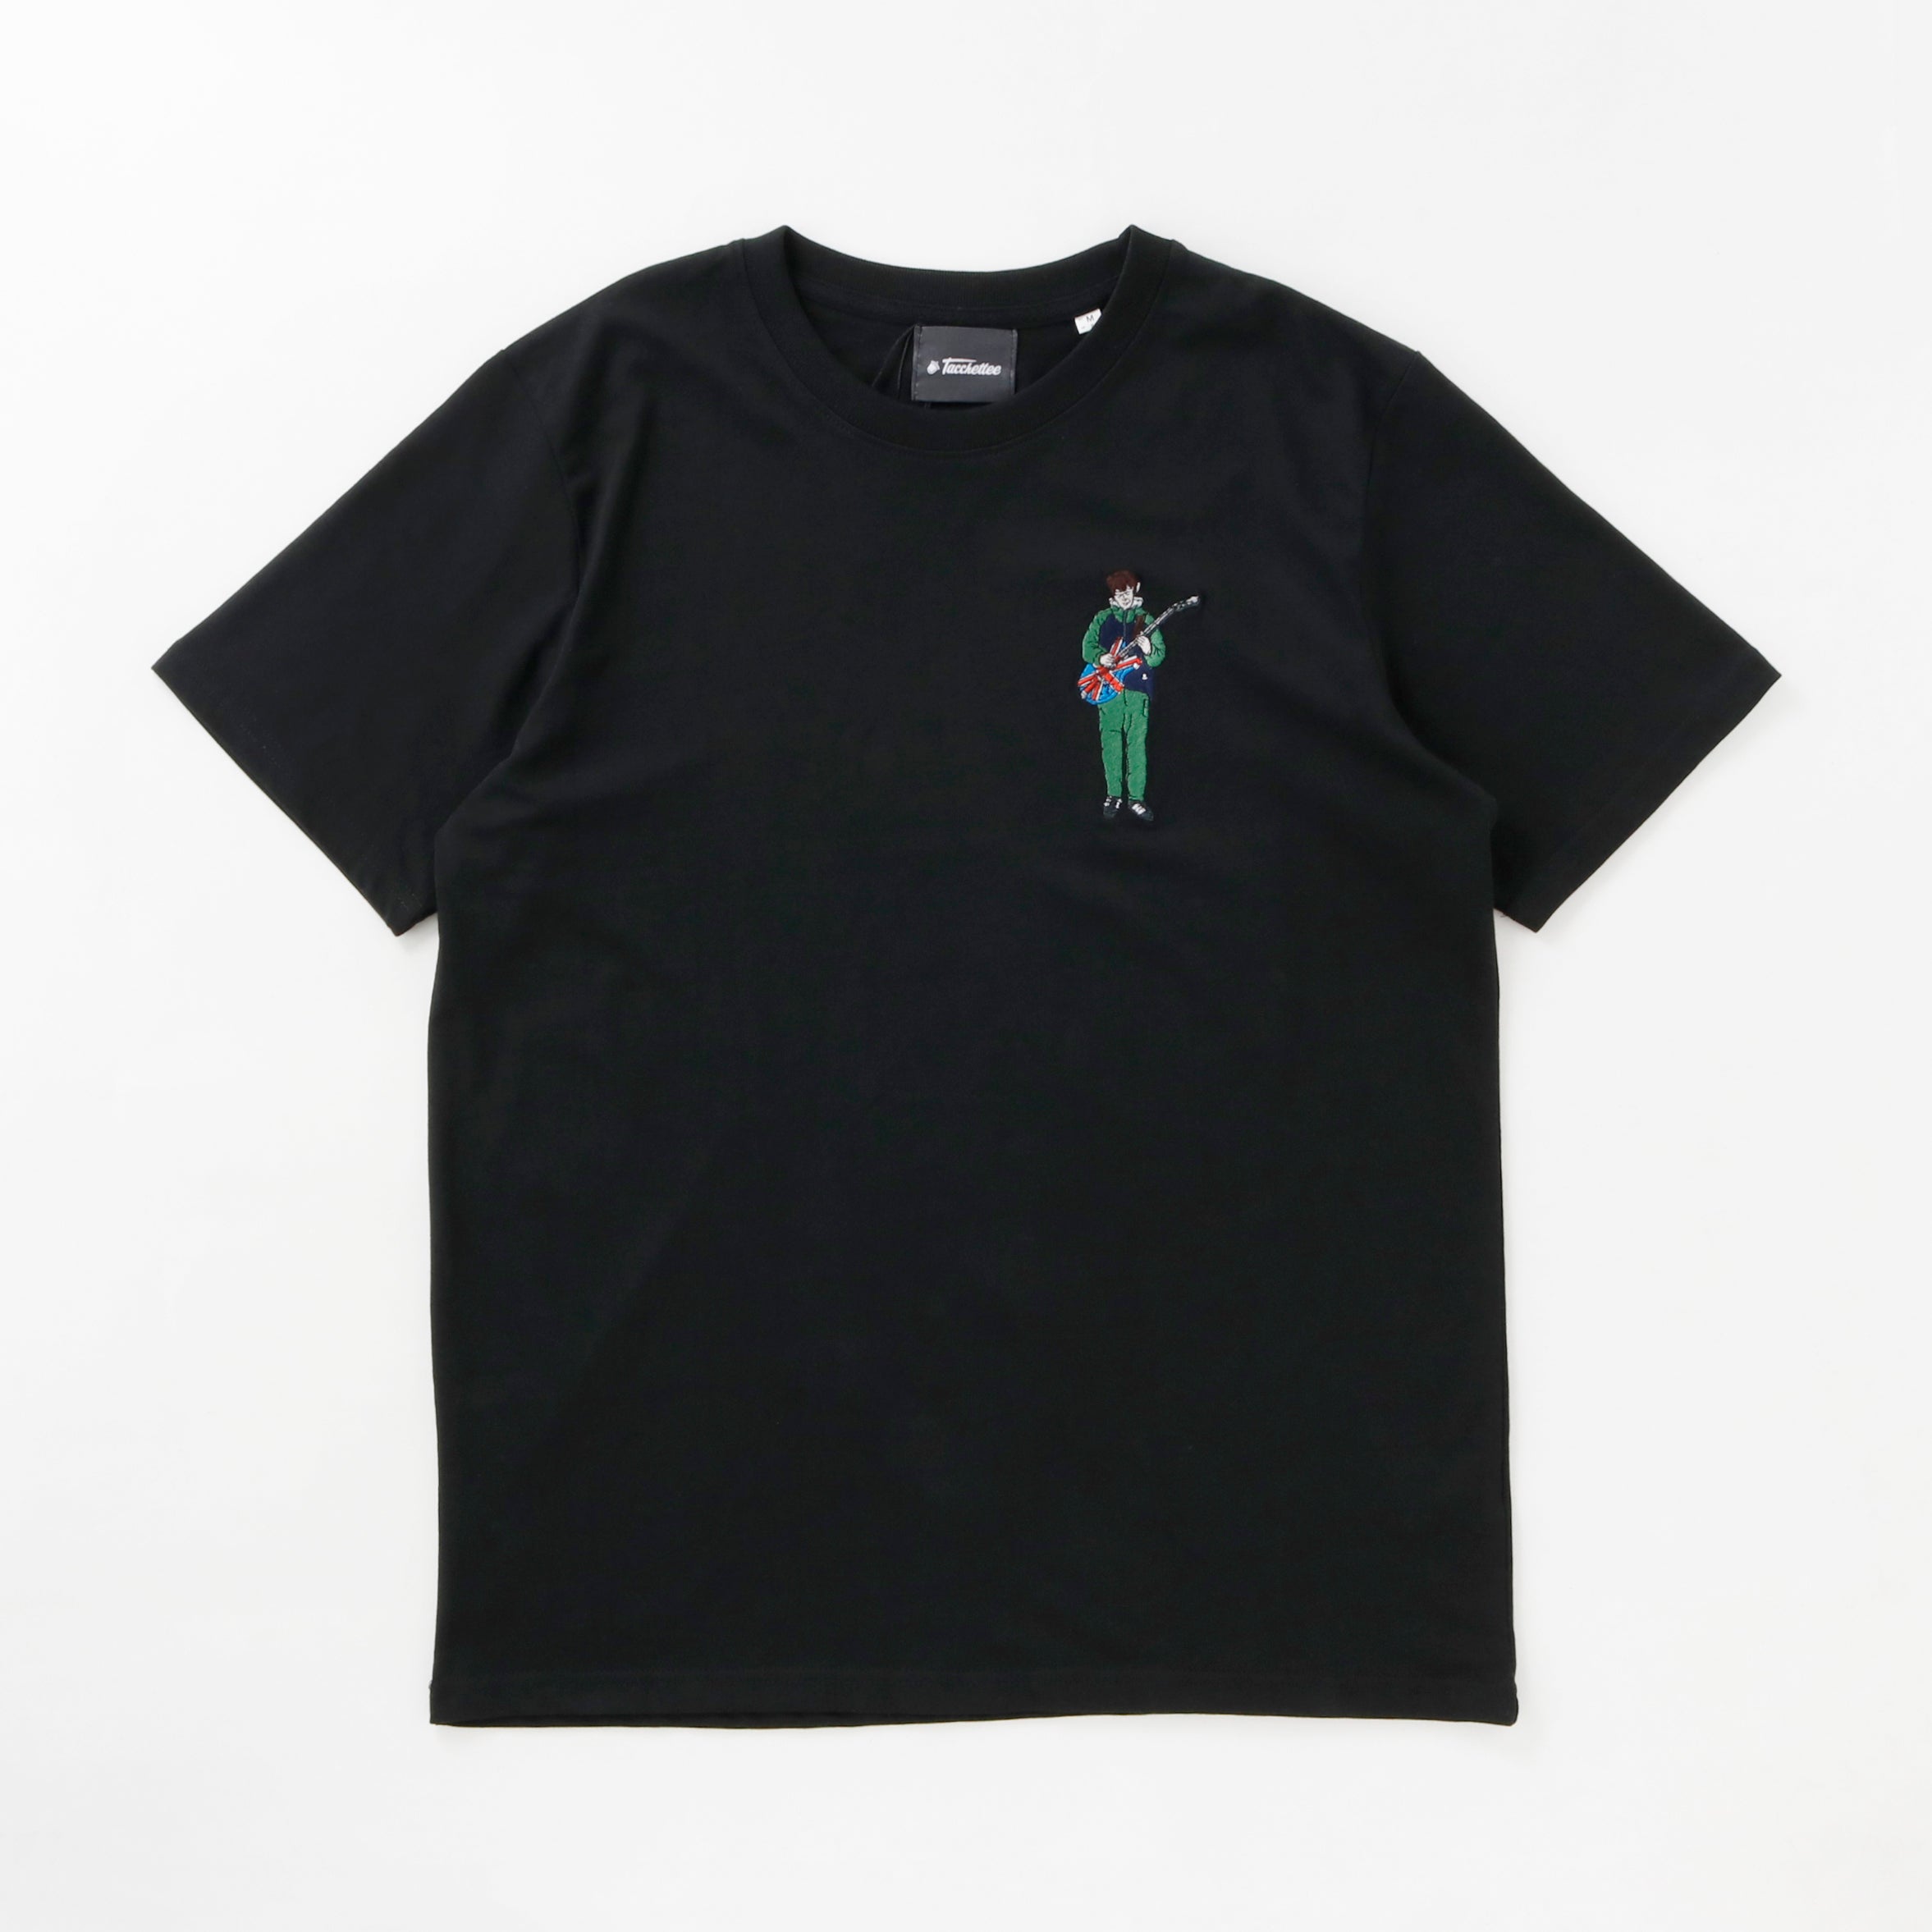 SUPERSONEEC T-Shirt-Black